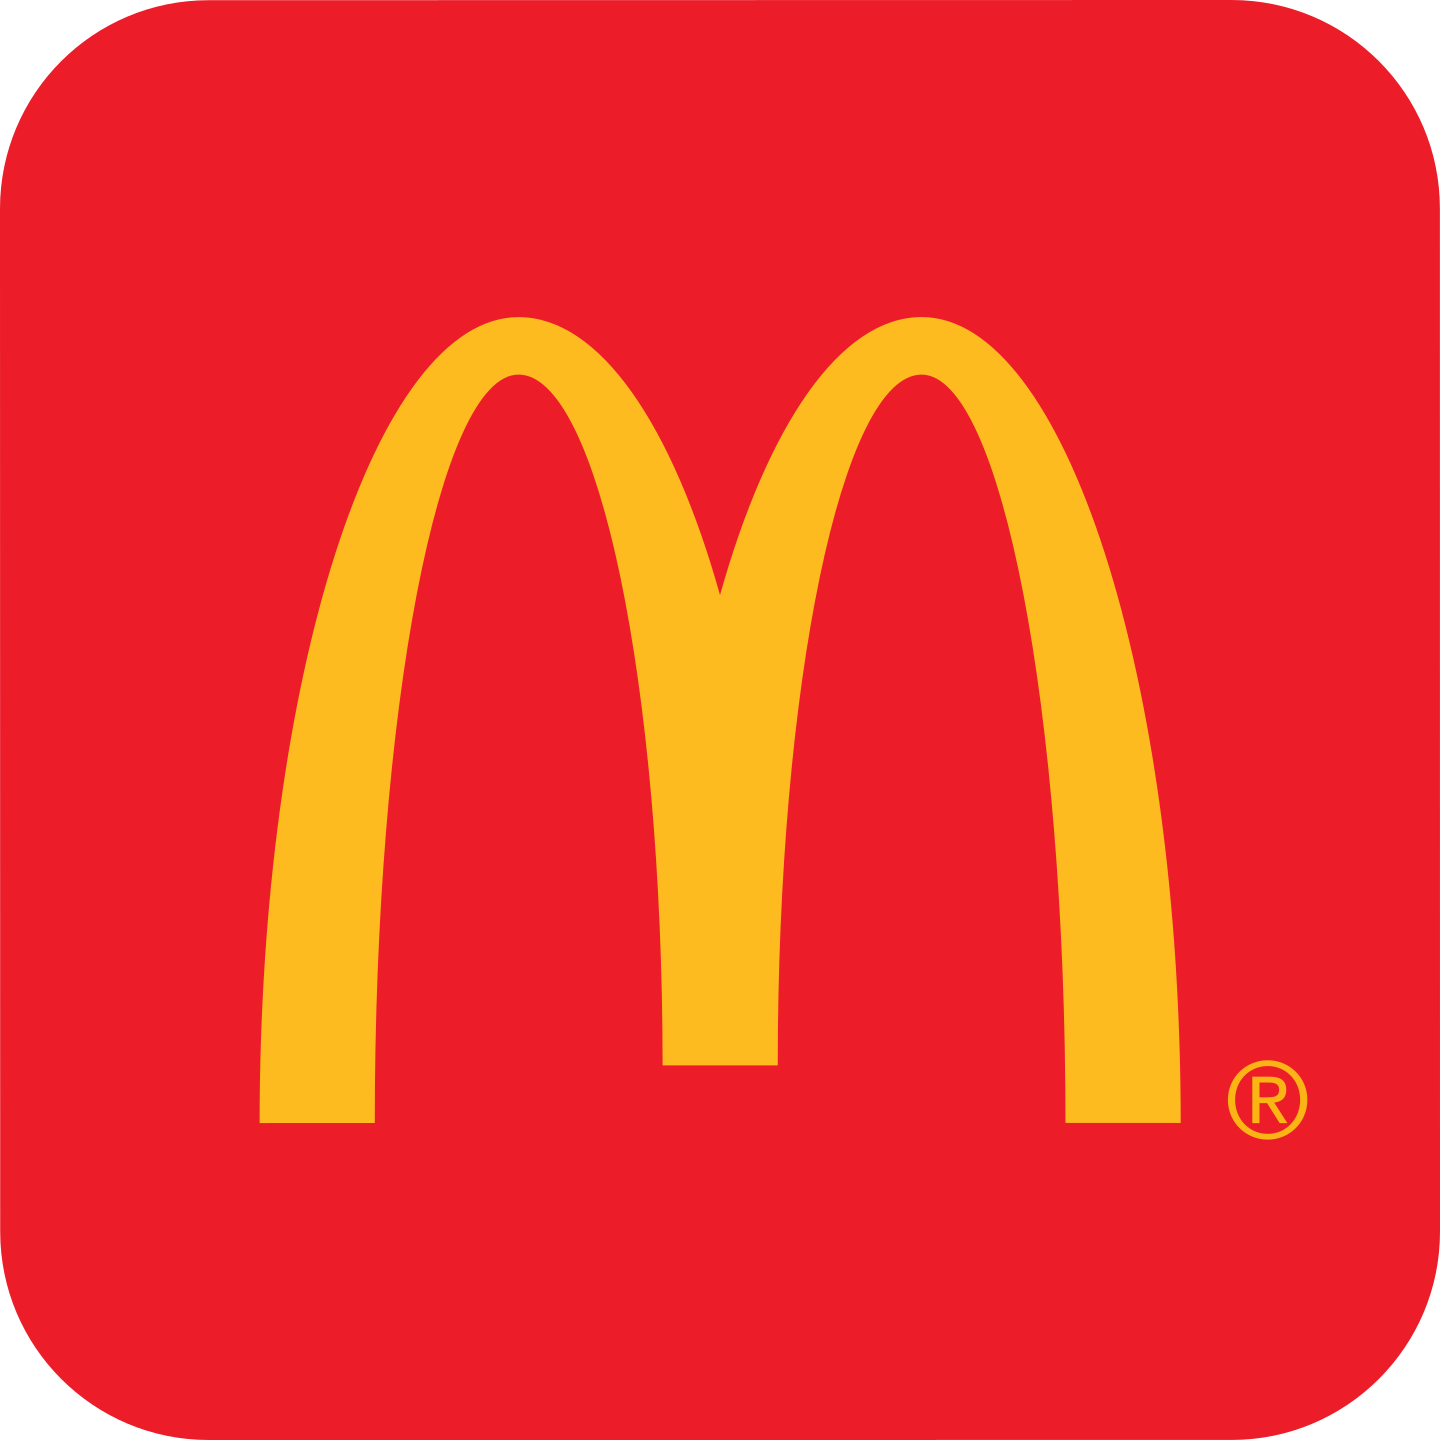 mcdonalds logo 2 1 - McDonald's Logo